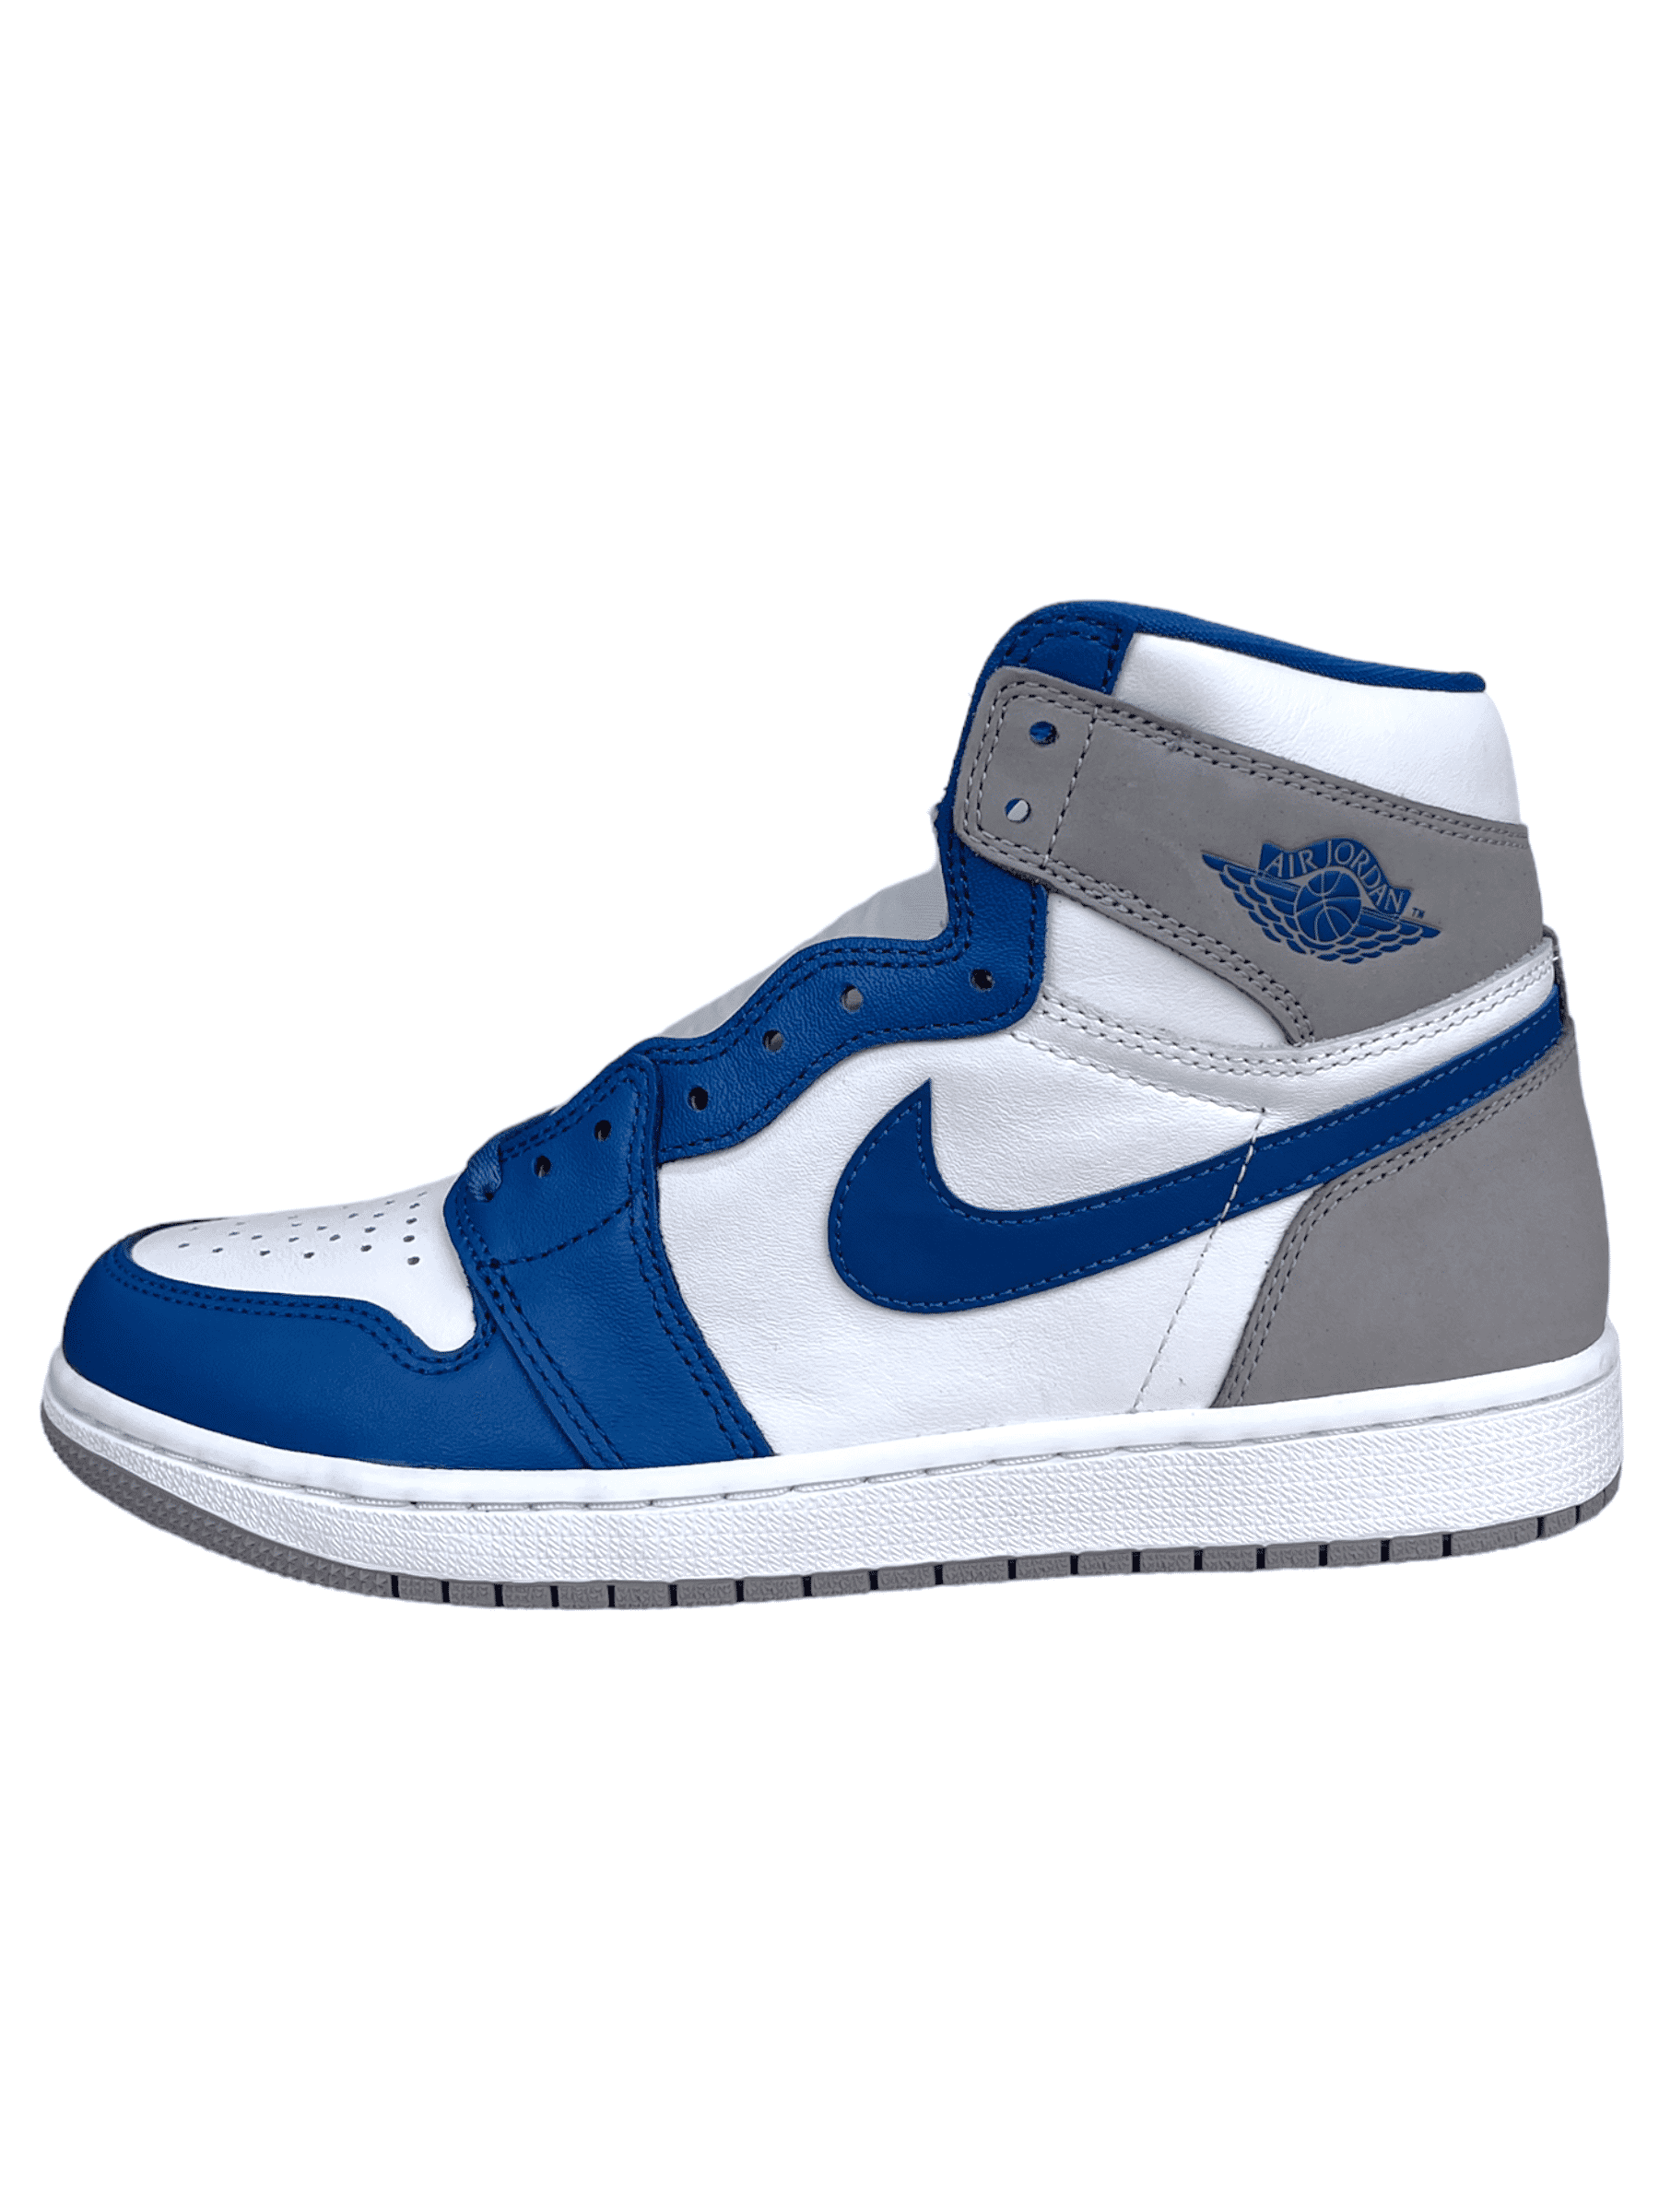 Nike Air Jordan 1 Retro High OG True Blue Sneakers